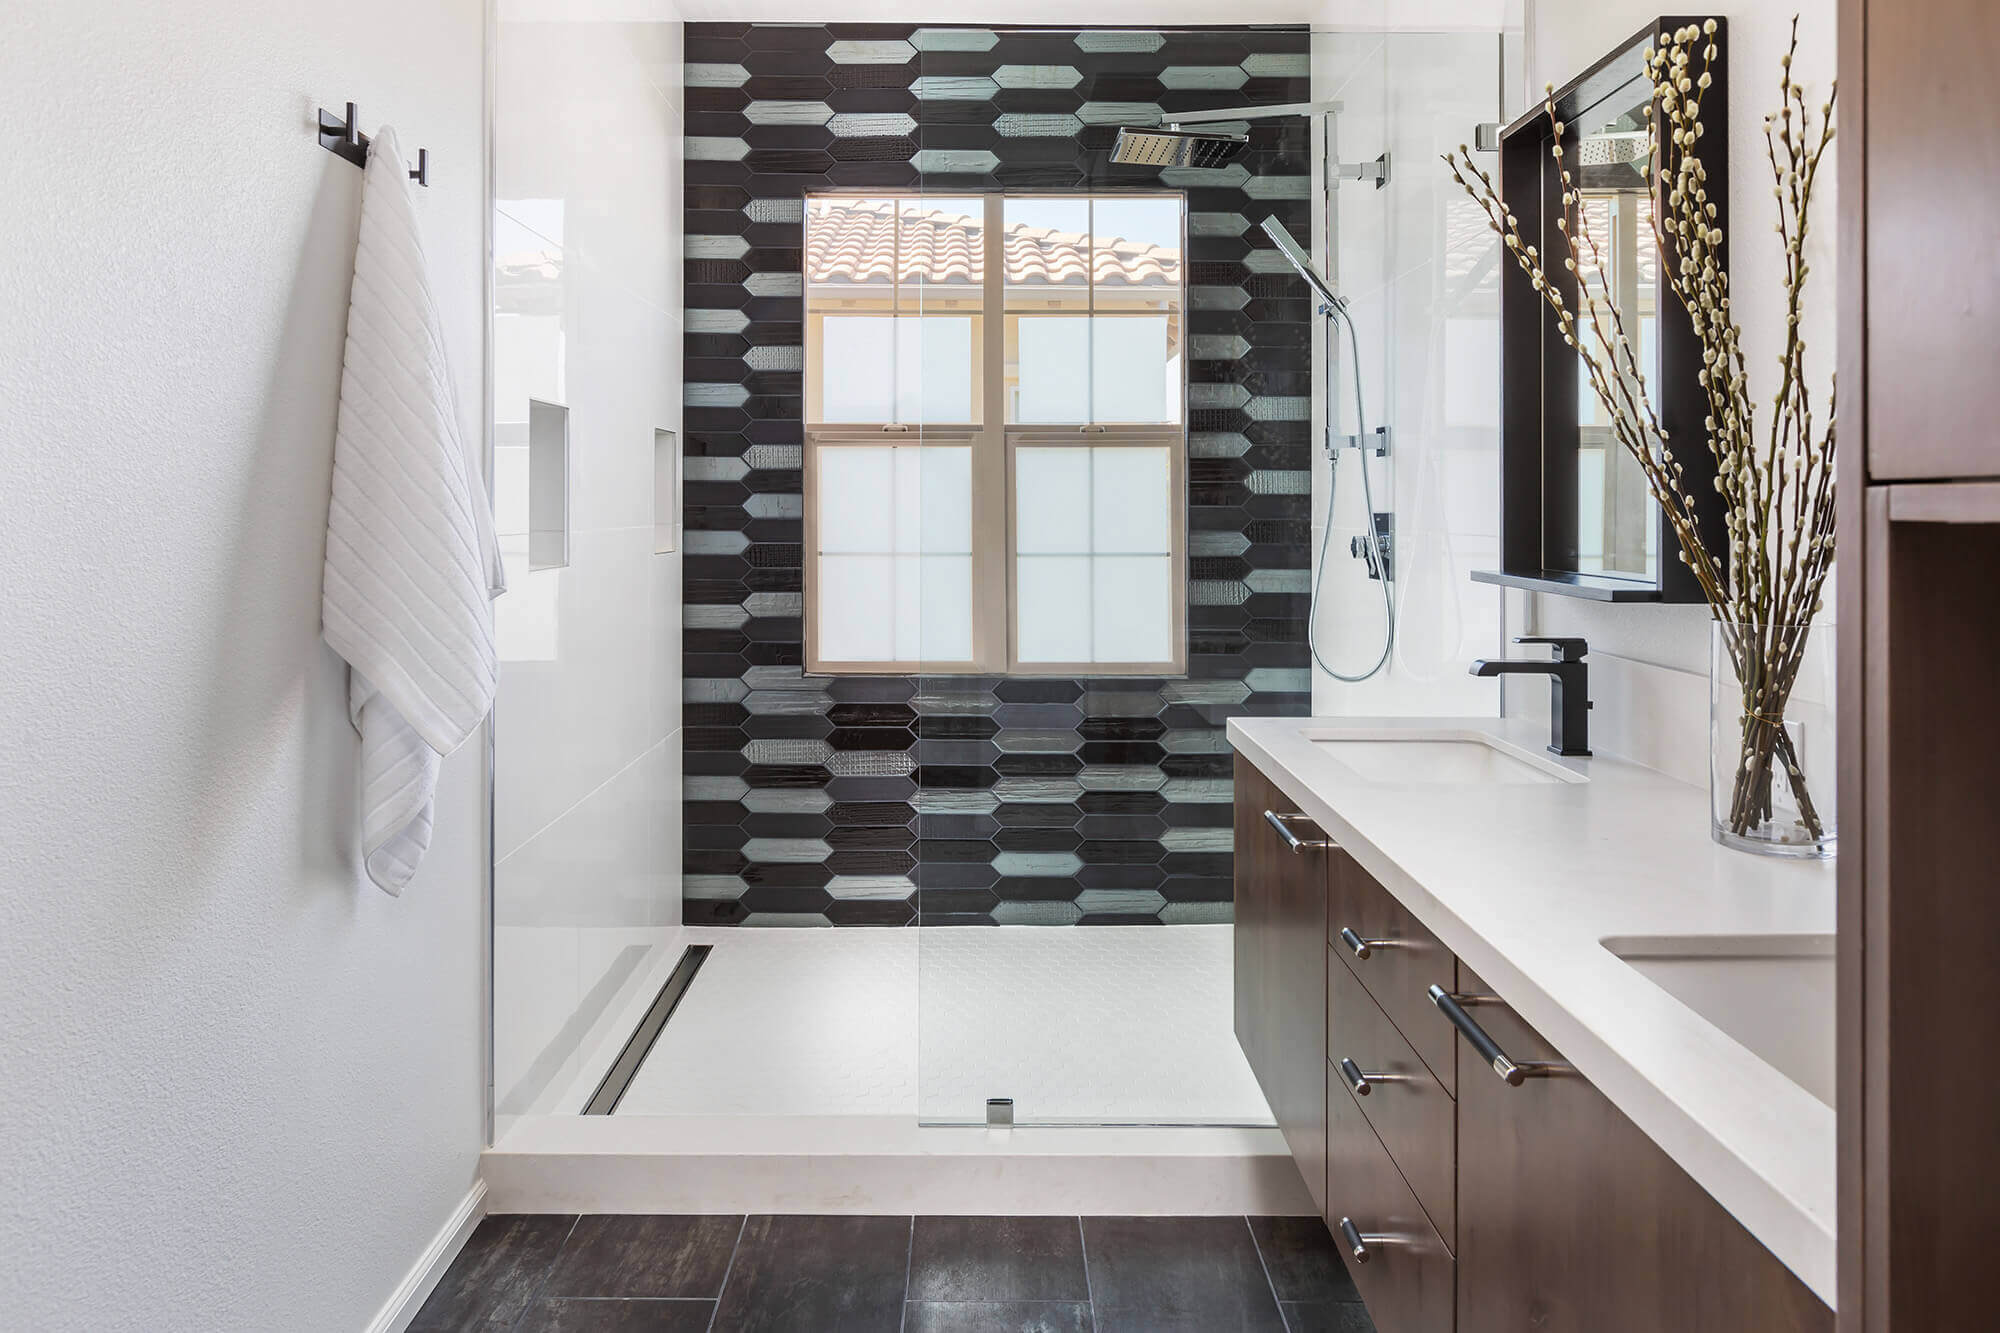 Walk-in shower with unique tile design